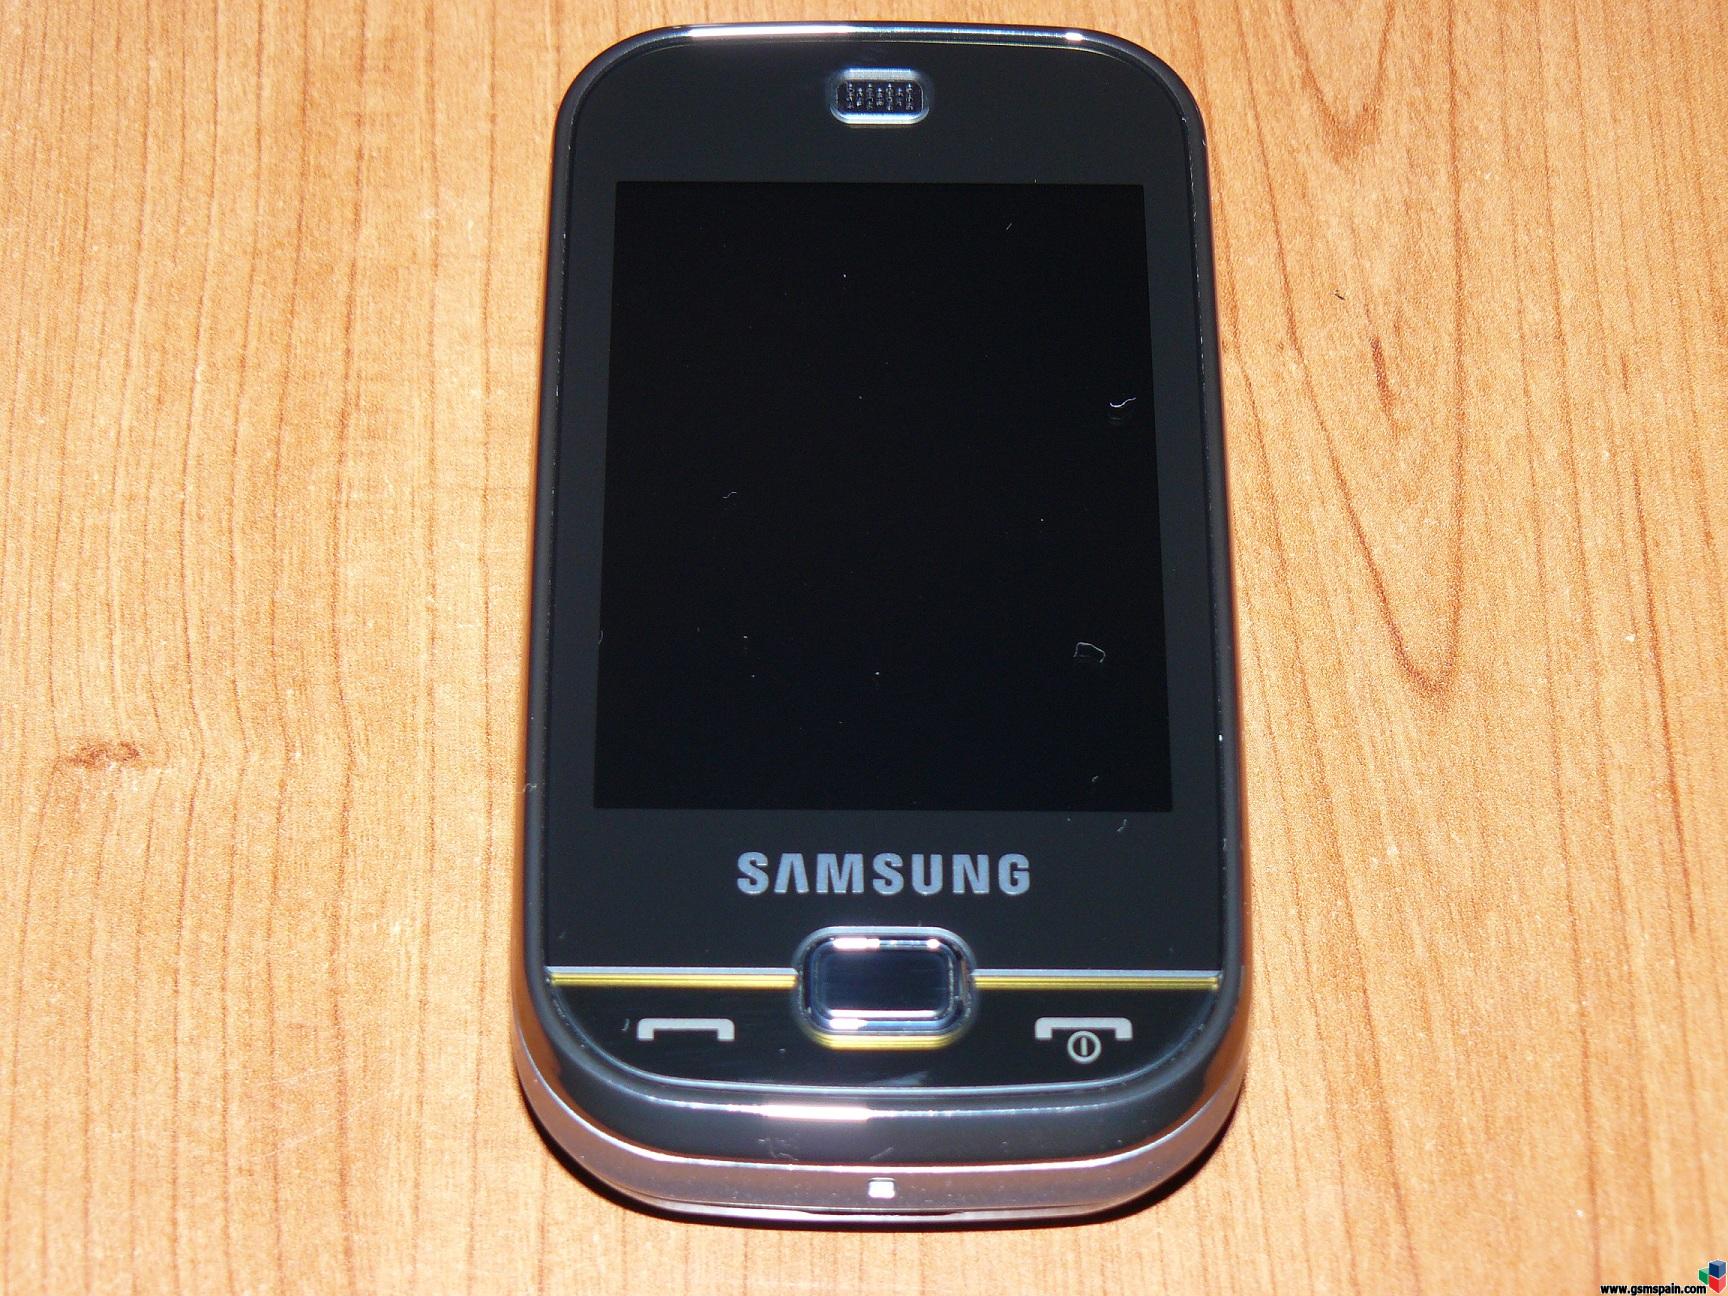 ^_^***Samsung GT-B5722 dual sim***^_^